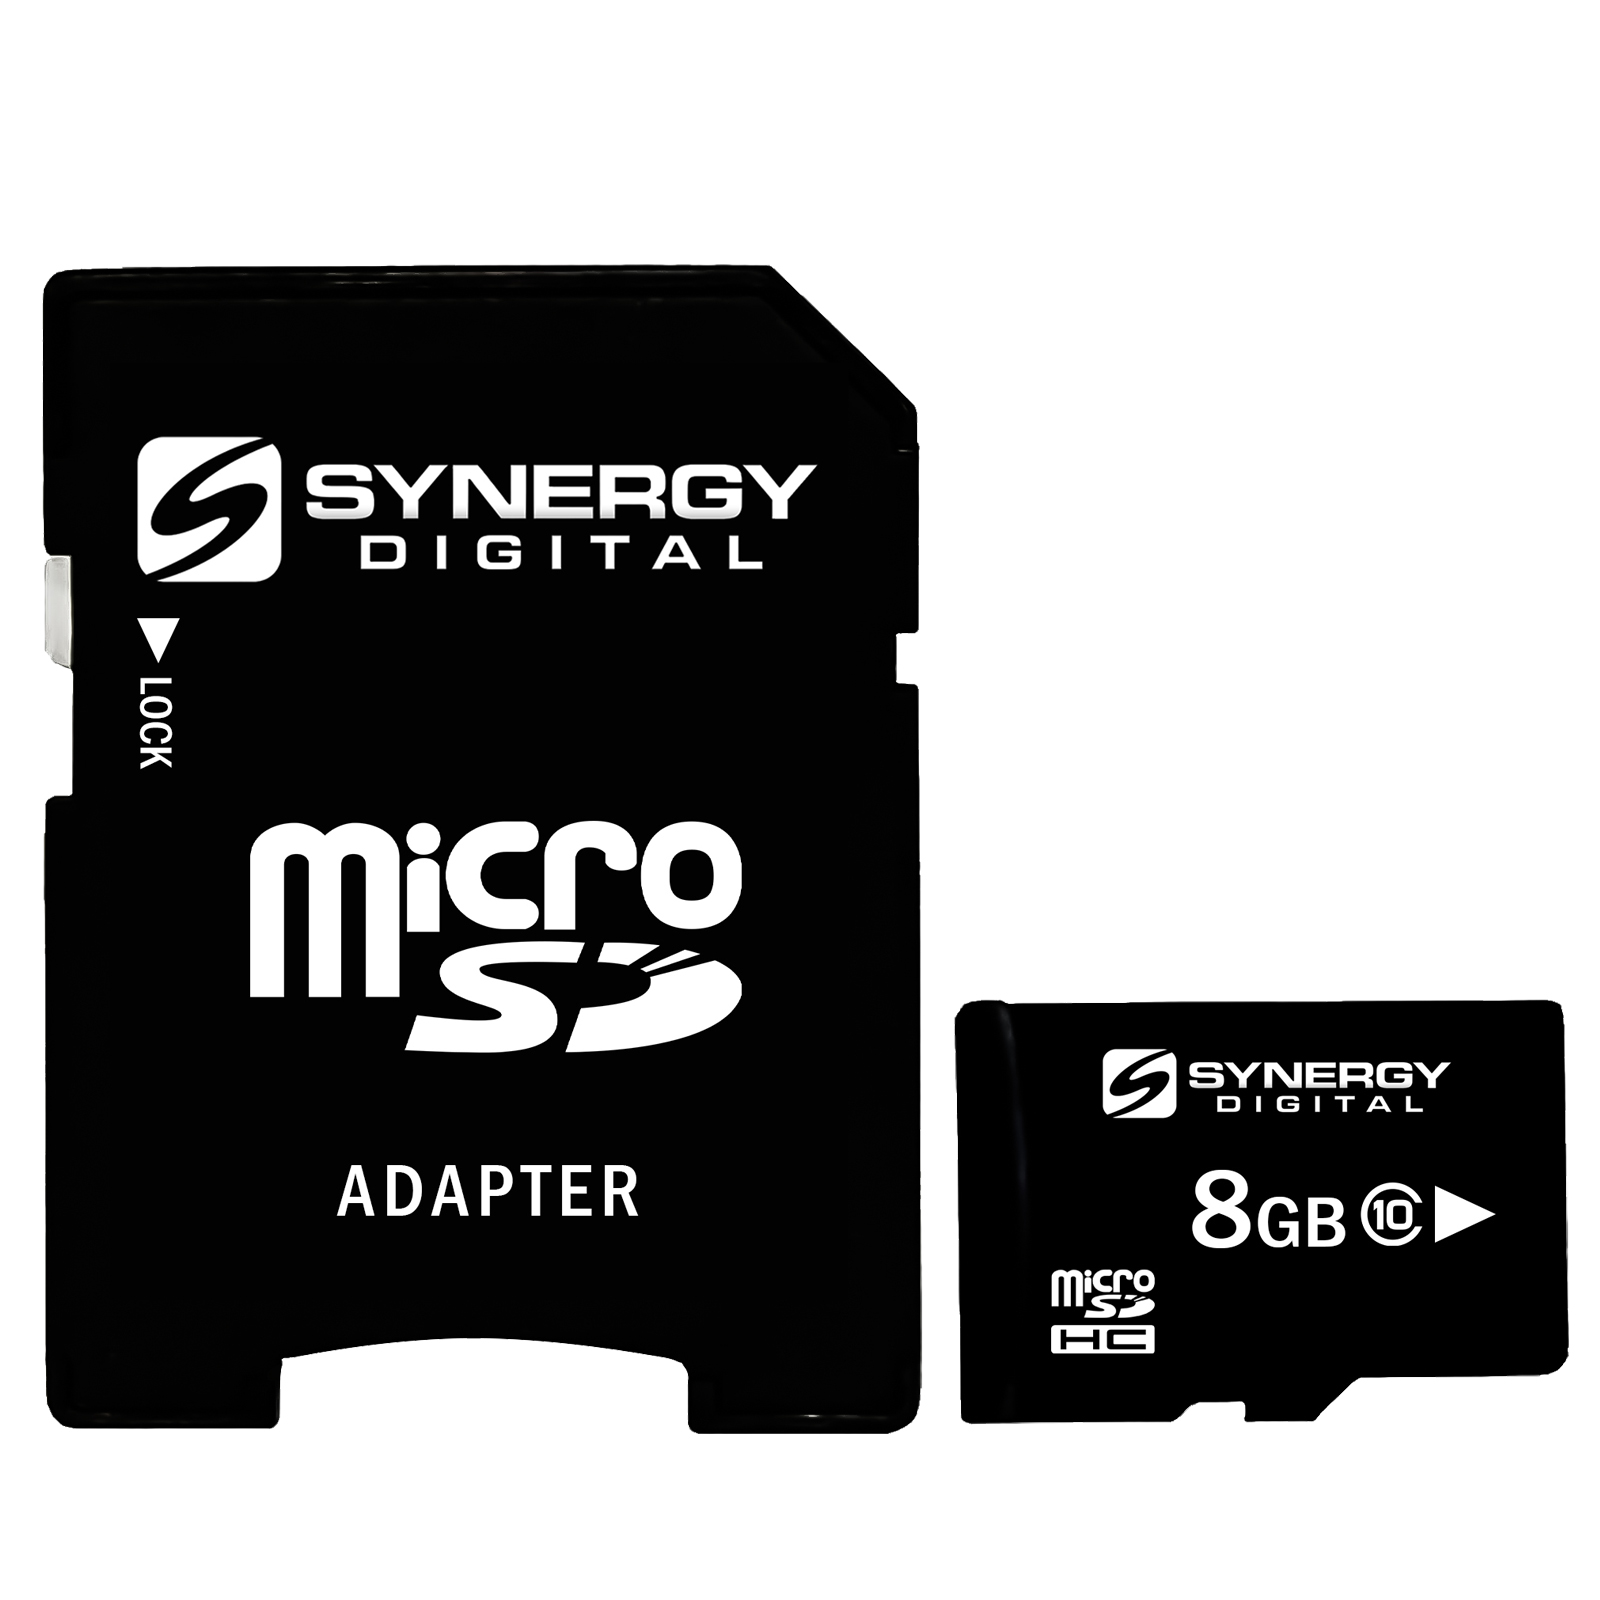 Memory Cards for SamsungDigital Camera